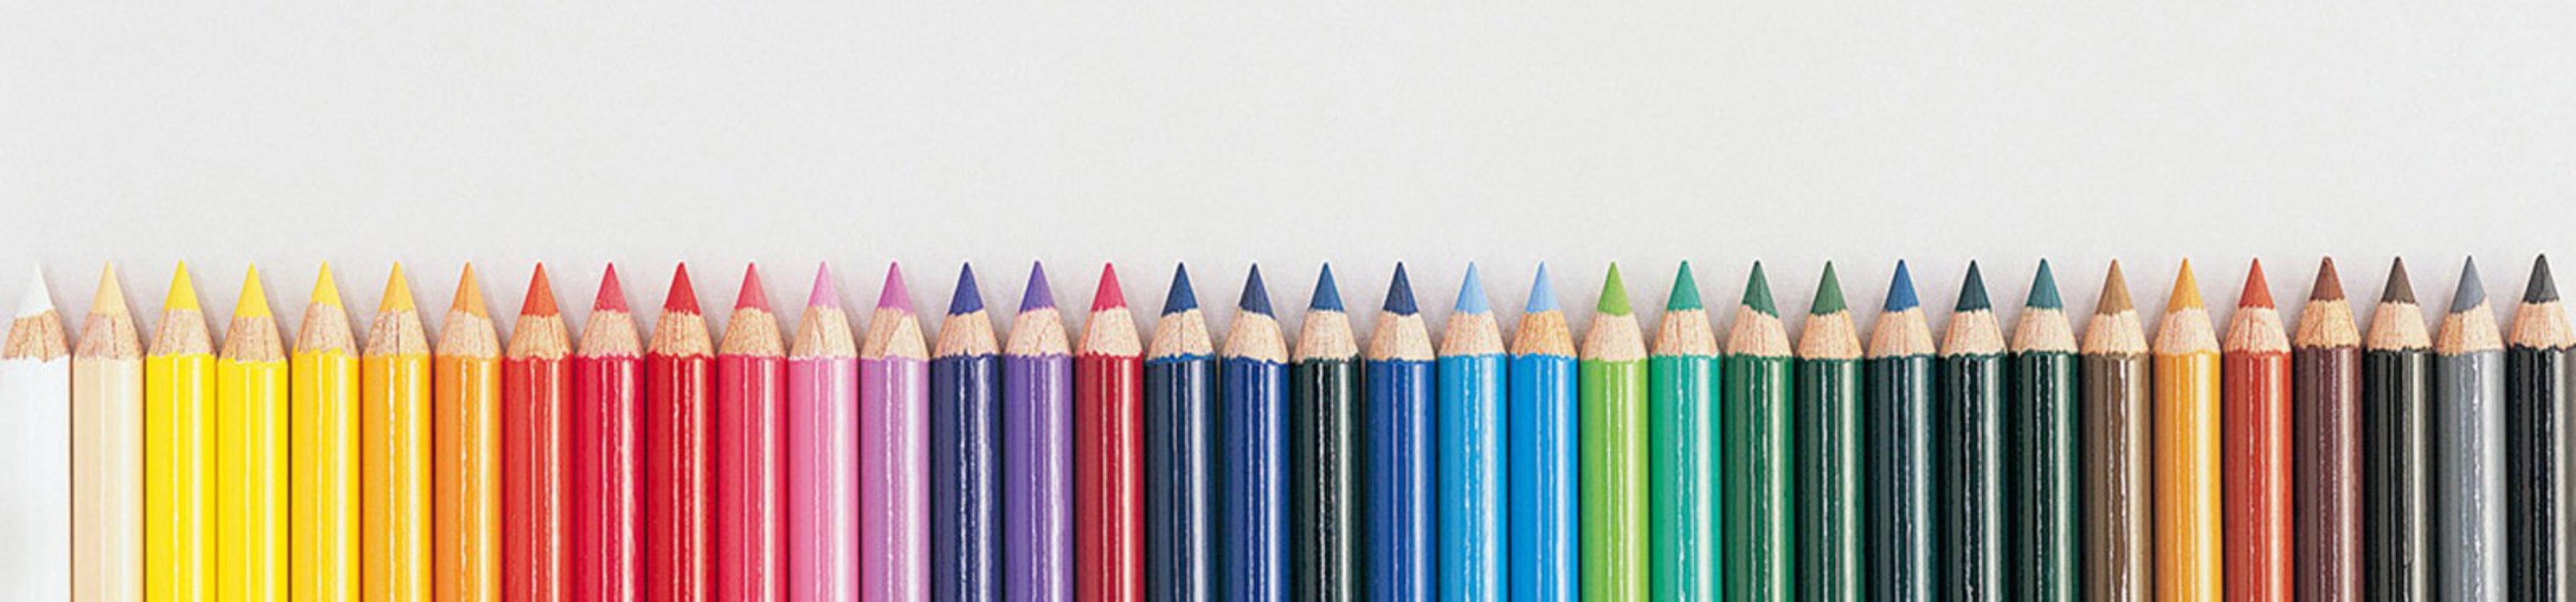 Pencils & Colour Pencils